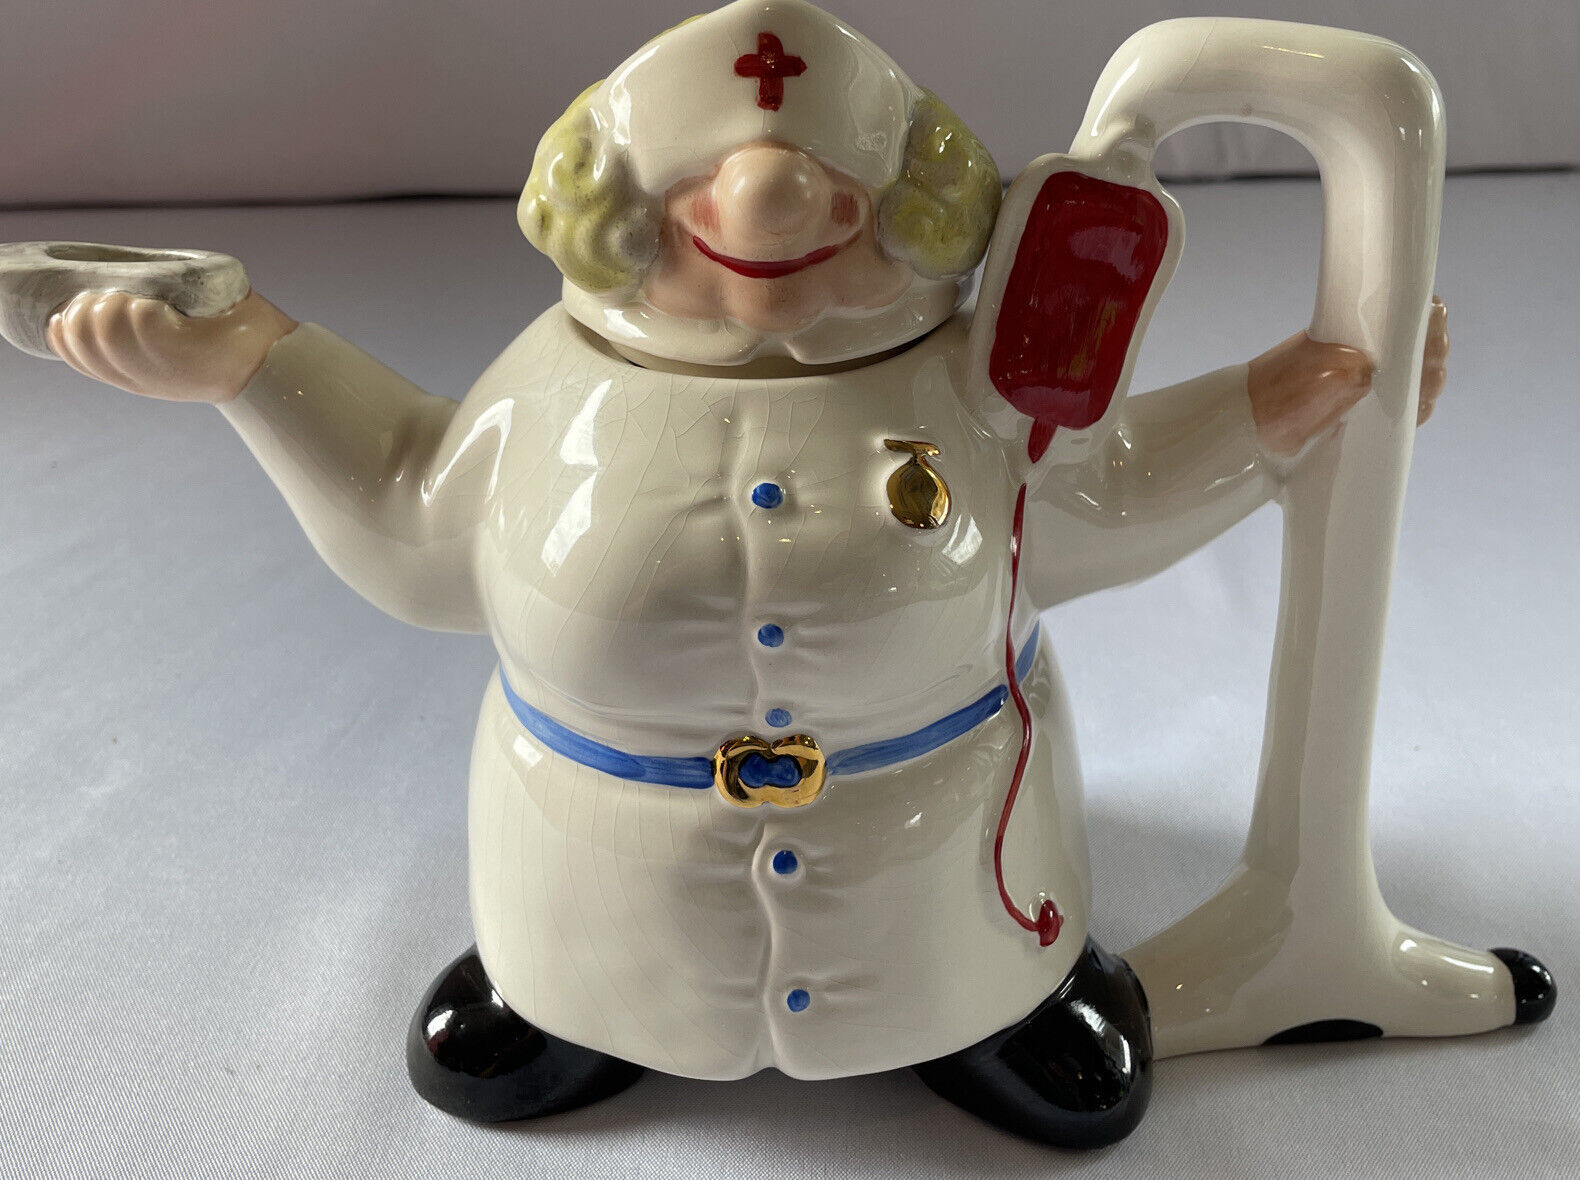 Vintage Coopercraft Teapot Nurse IV Pole Handle Made In England Very Unique Rare